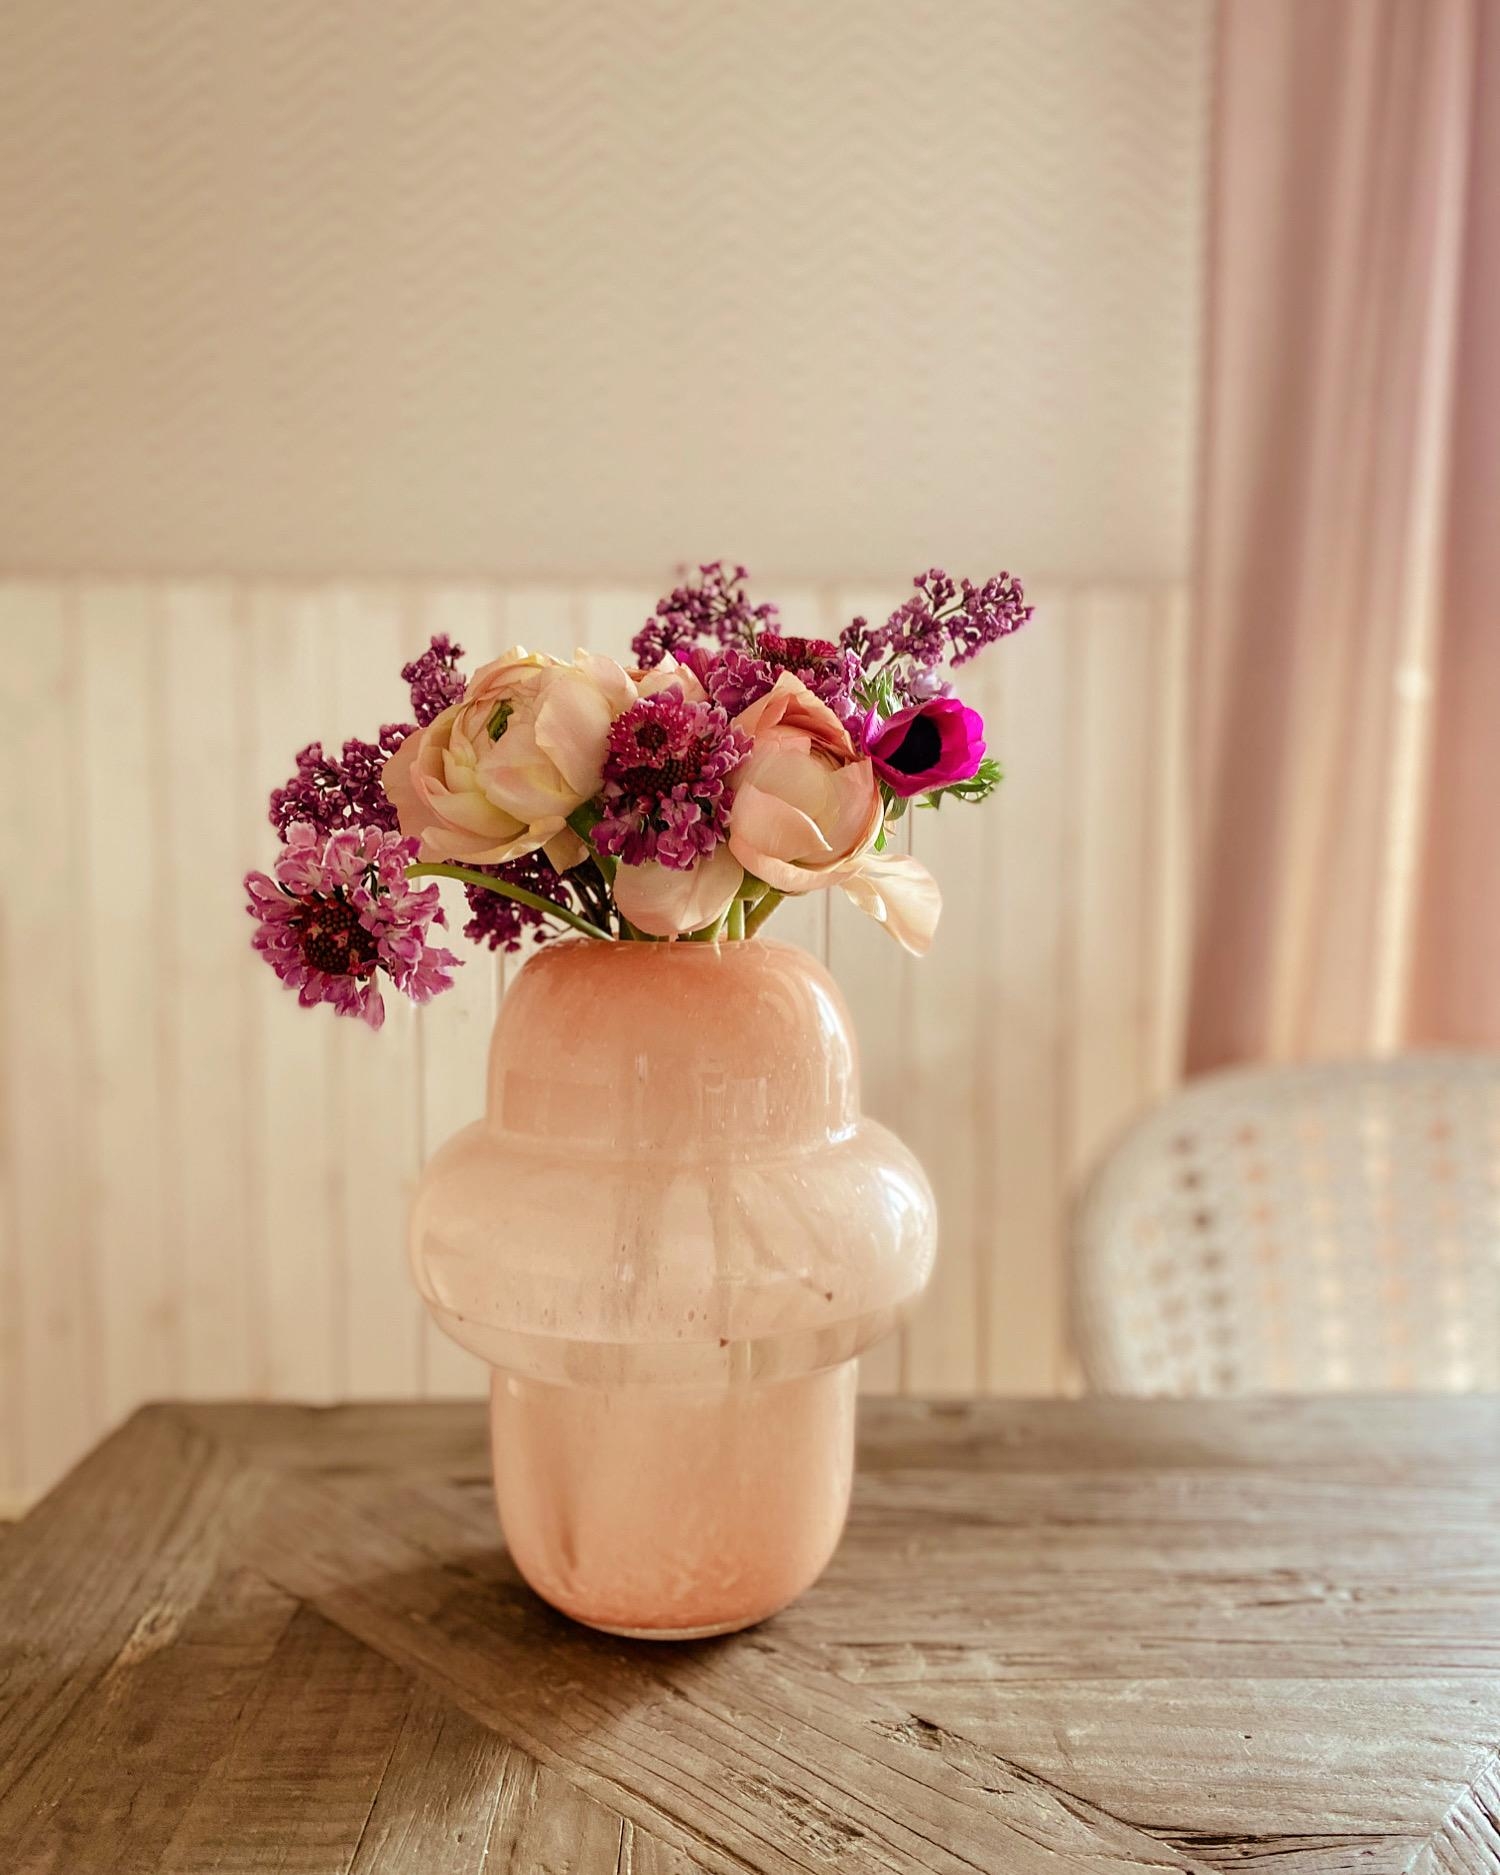 #vasenmittwoch#lieblingsteil#flowerpower#dekoideen#wochenteiler#tabledecor